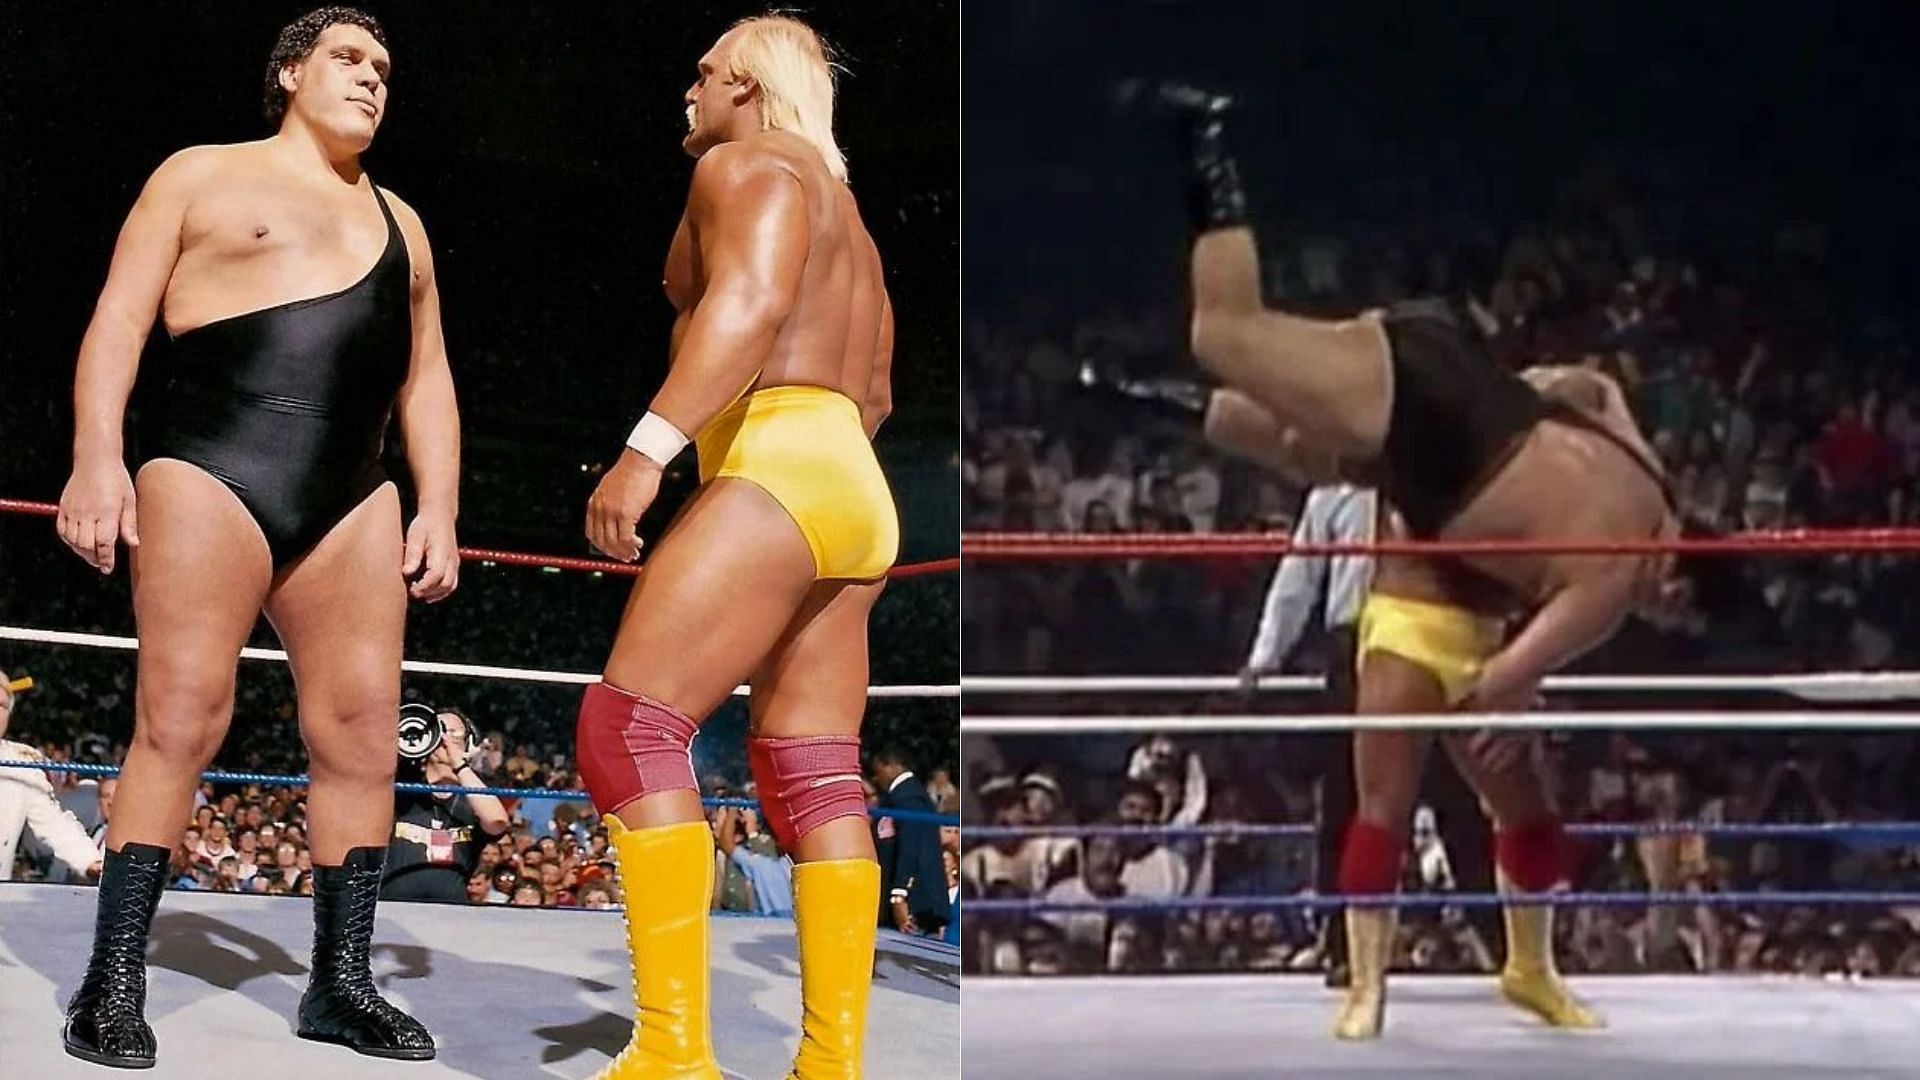 Hulk Hogan beat Andre the Giant at WrestleMania 3 in 1987.